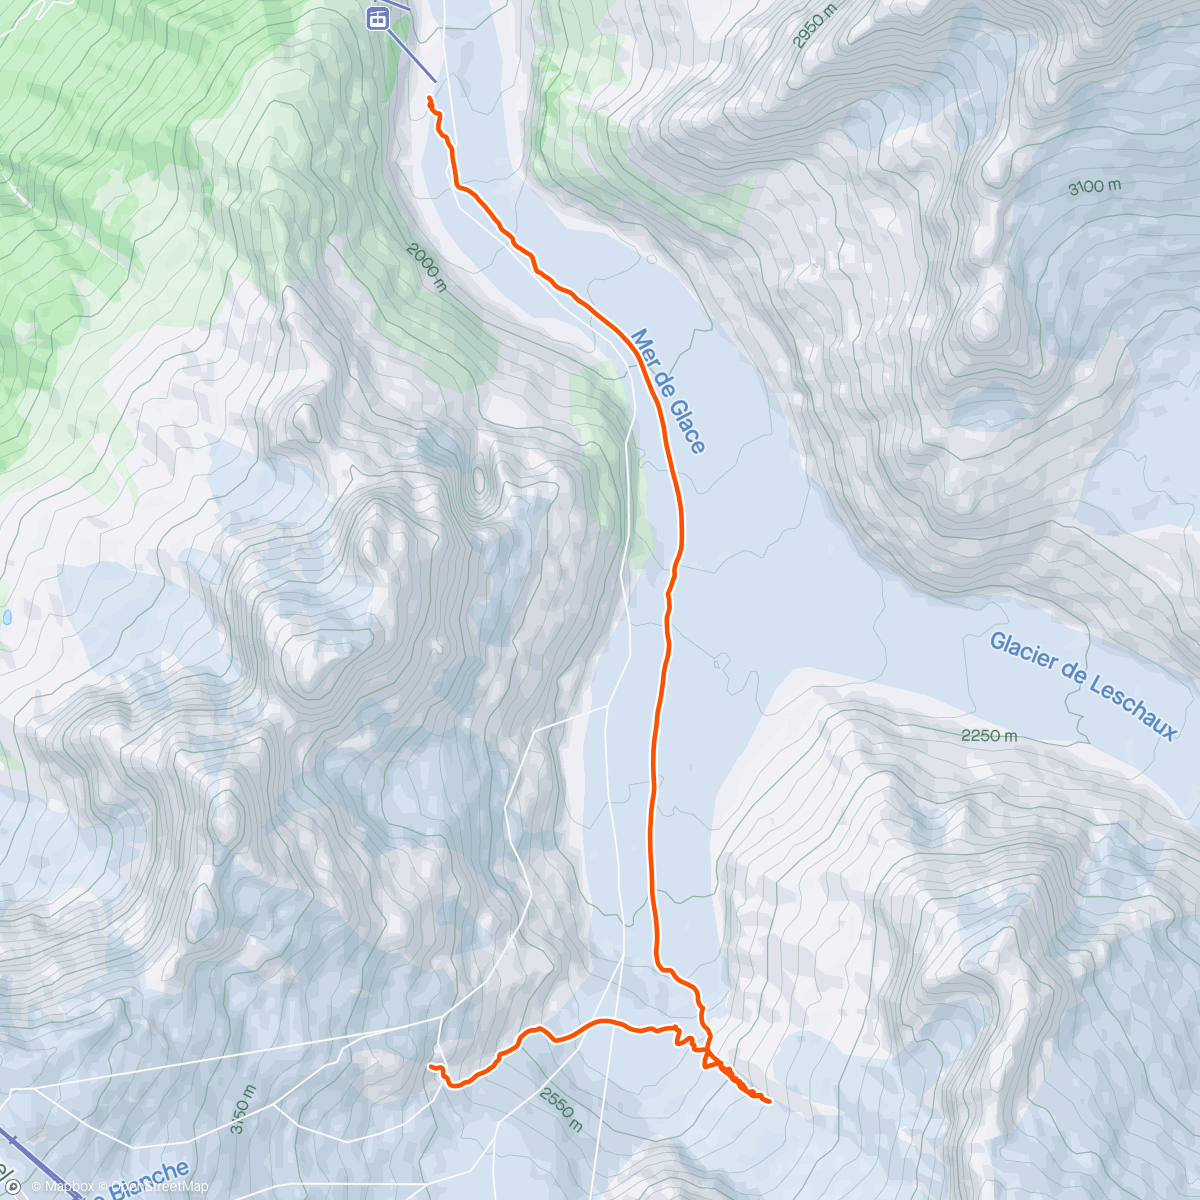 Map of the activity, Valleé Blanche & Périades Glacier